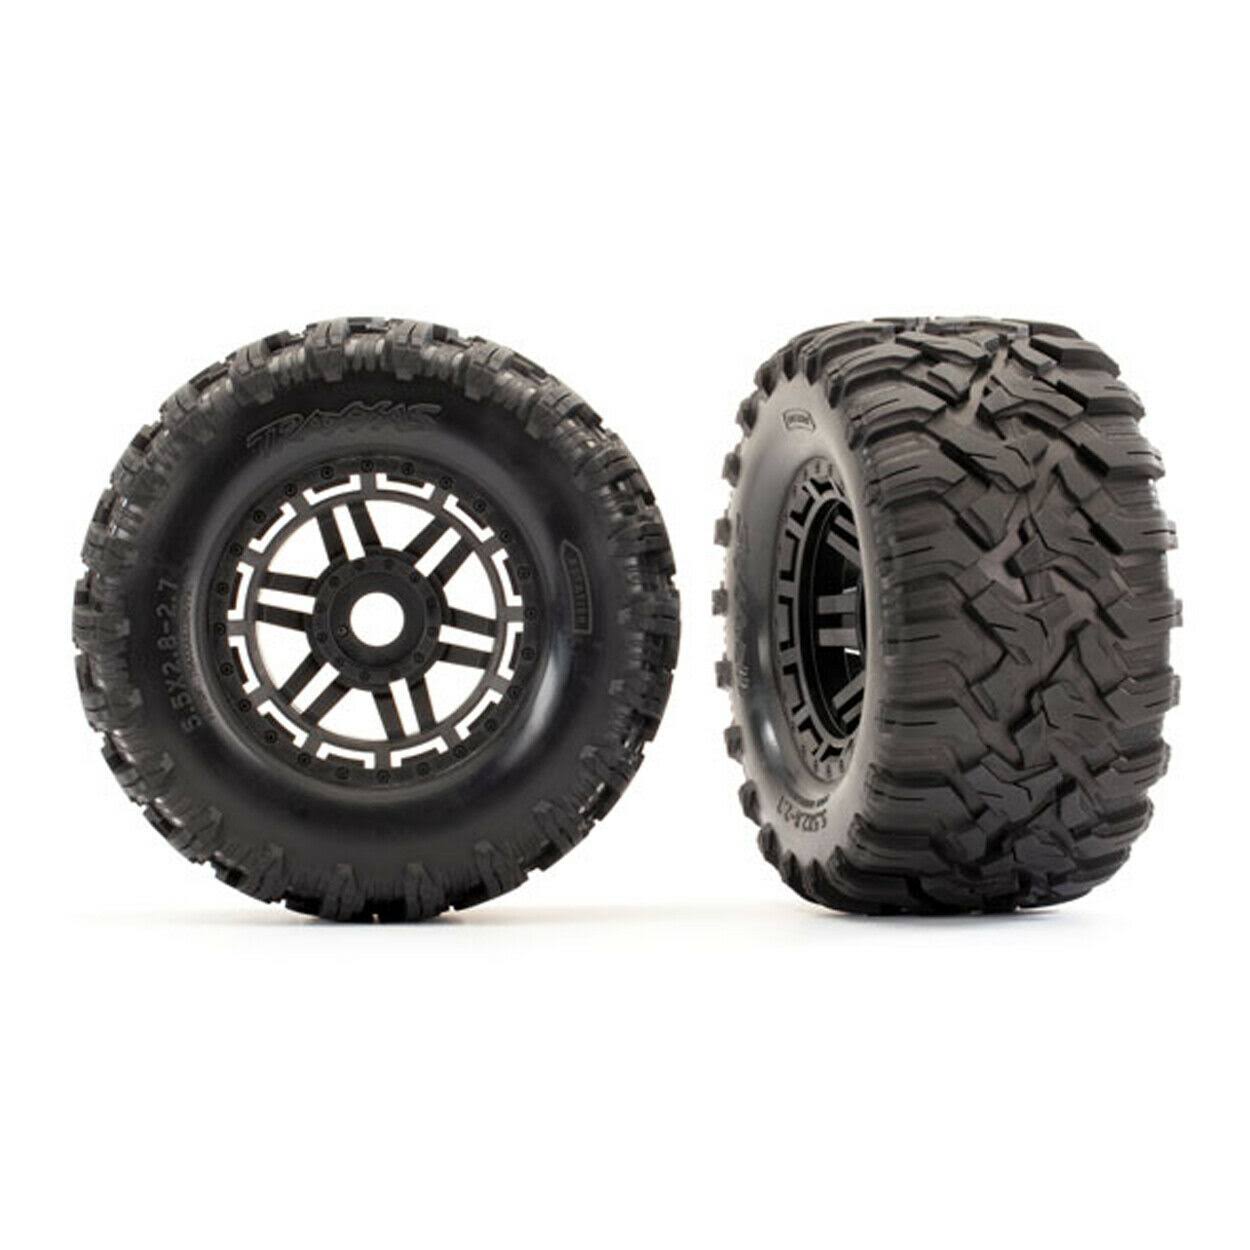 Traxxas 8972 - All-Terrain Tires & Black Maxx Wheels, 17mm Splined (2)